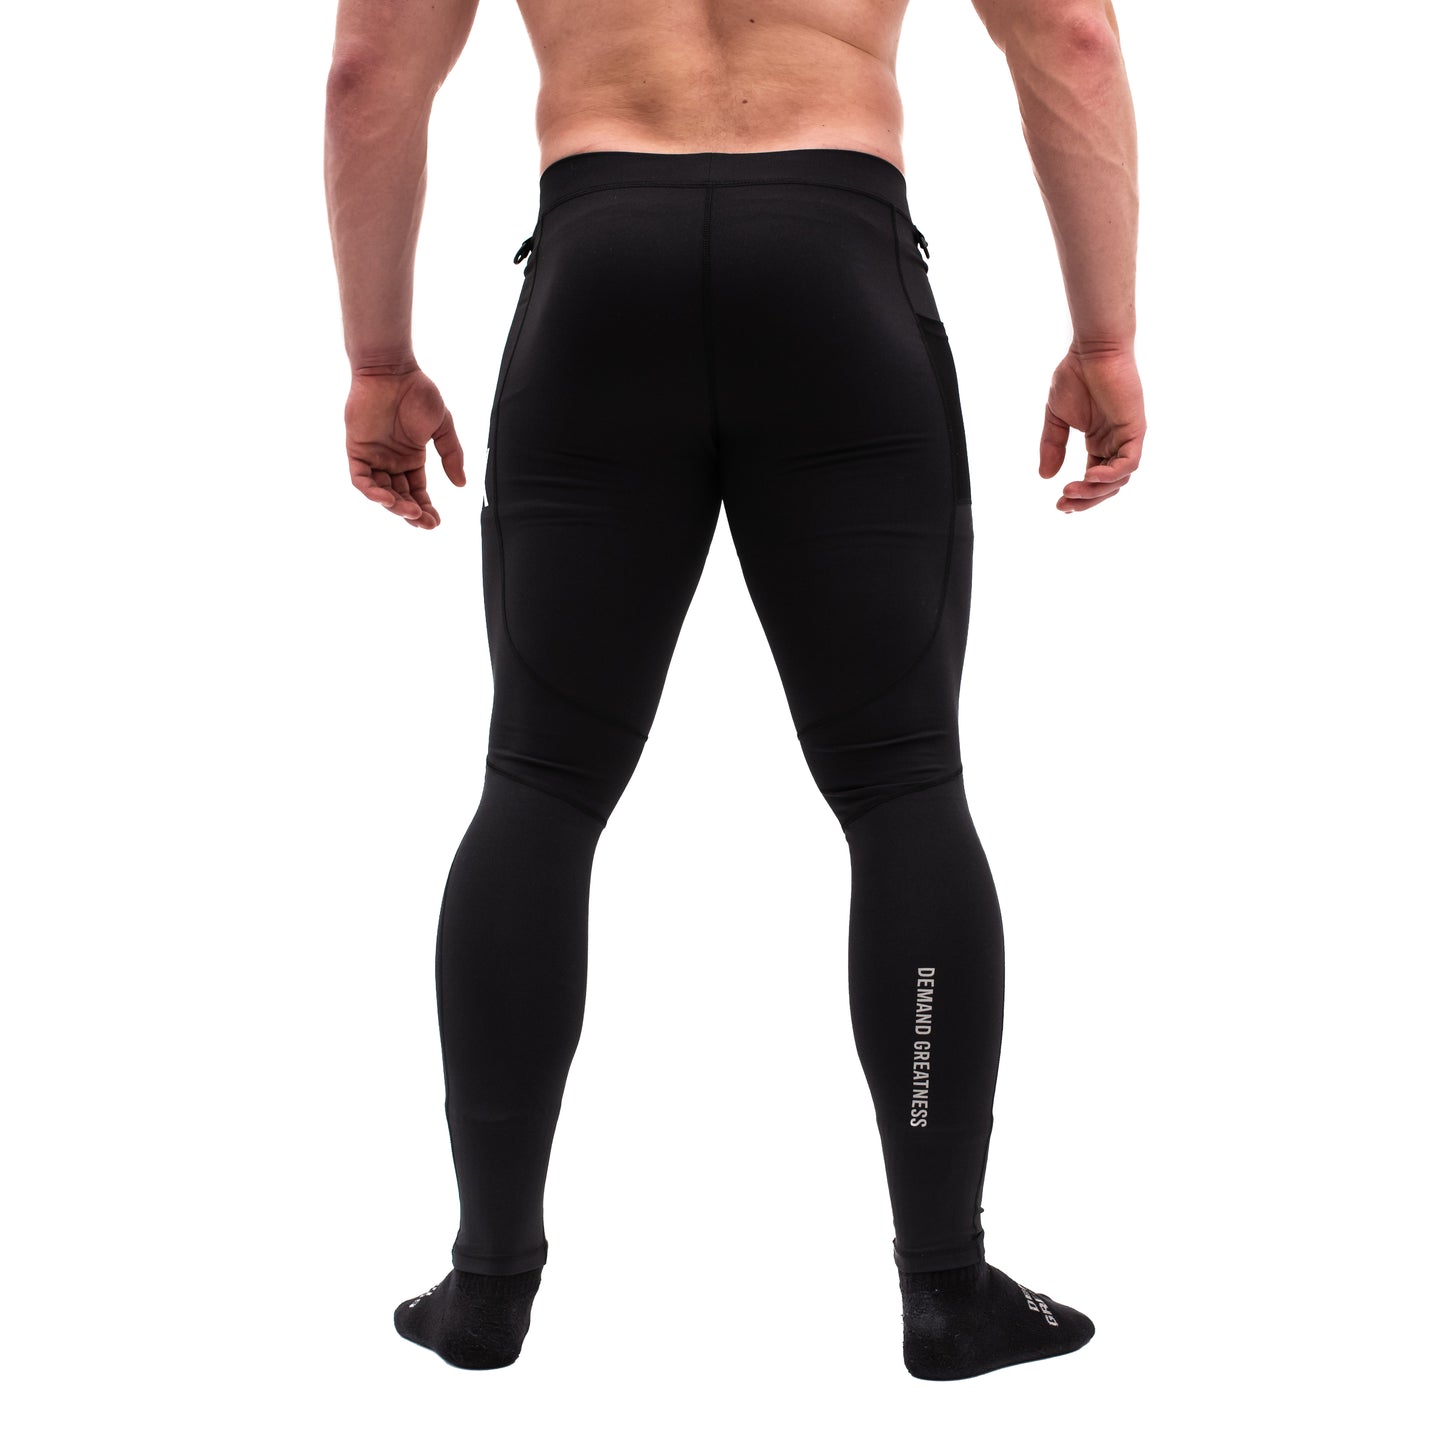 OX Men's Black Gym Compression Pants - Stealth